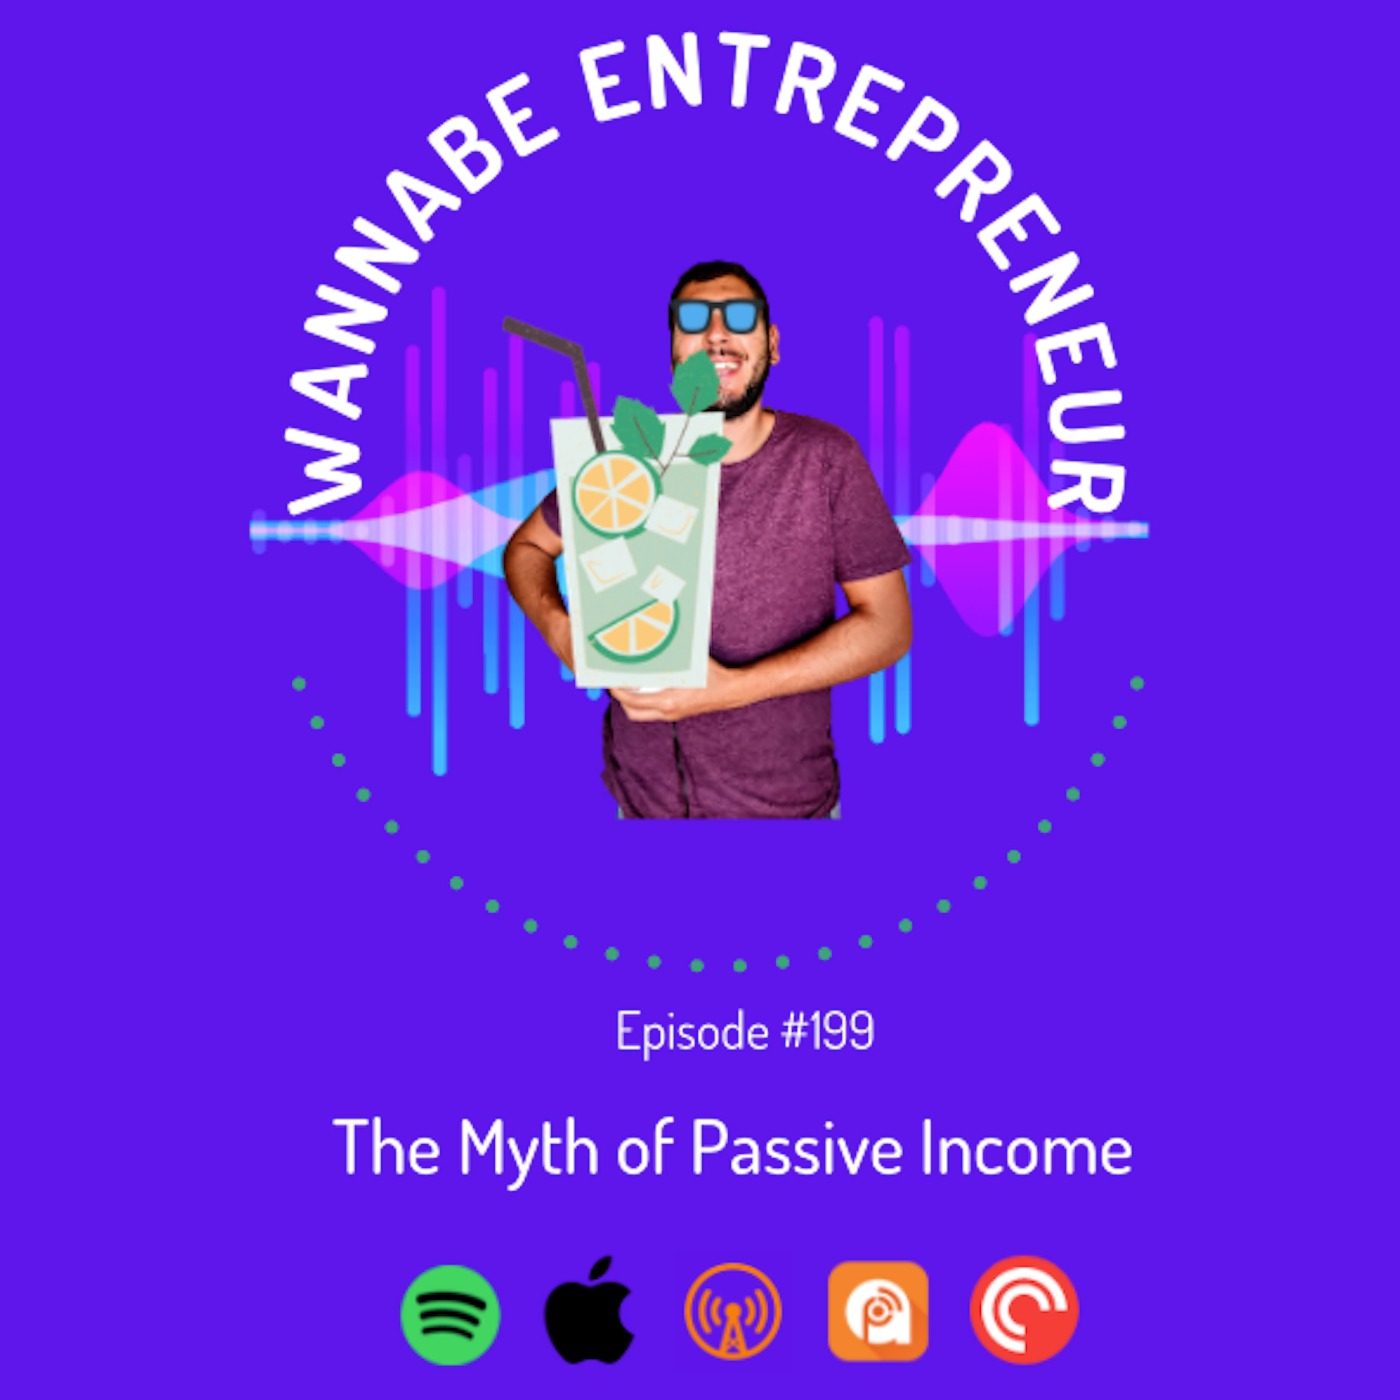 The Myth of Passive Income